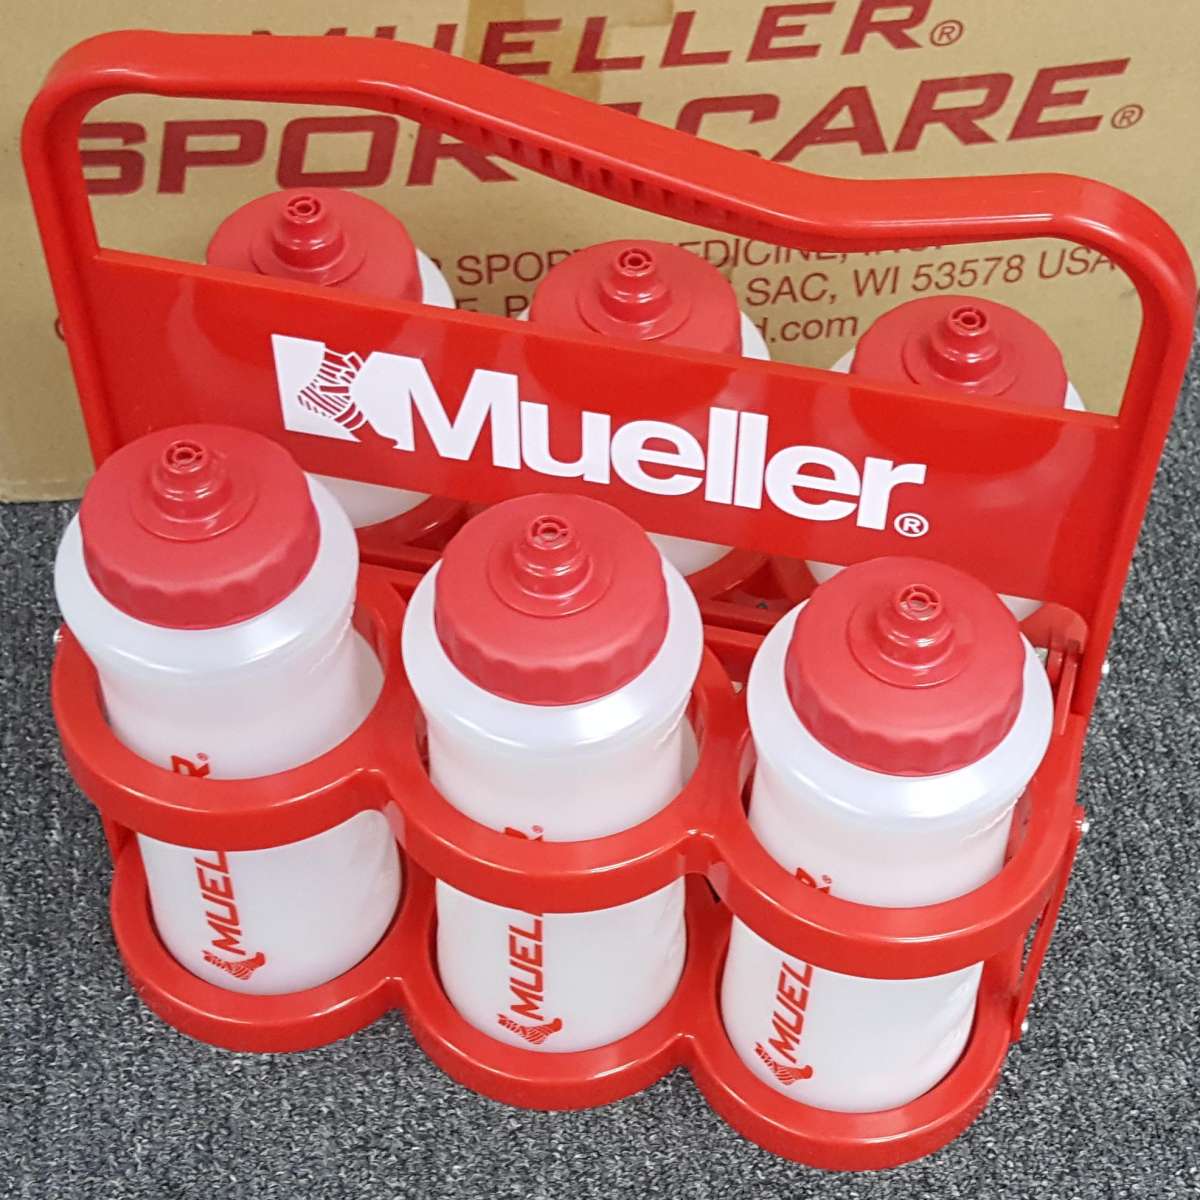 Mueller Quart Water Bottle Carrier (RED)